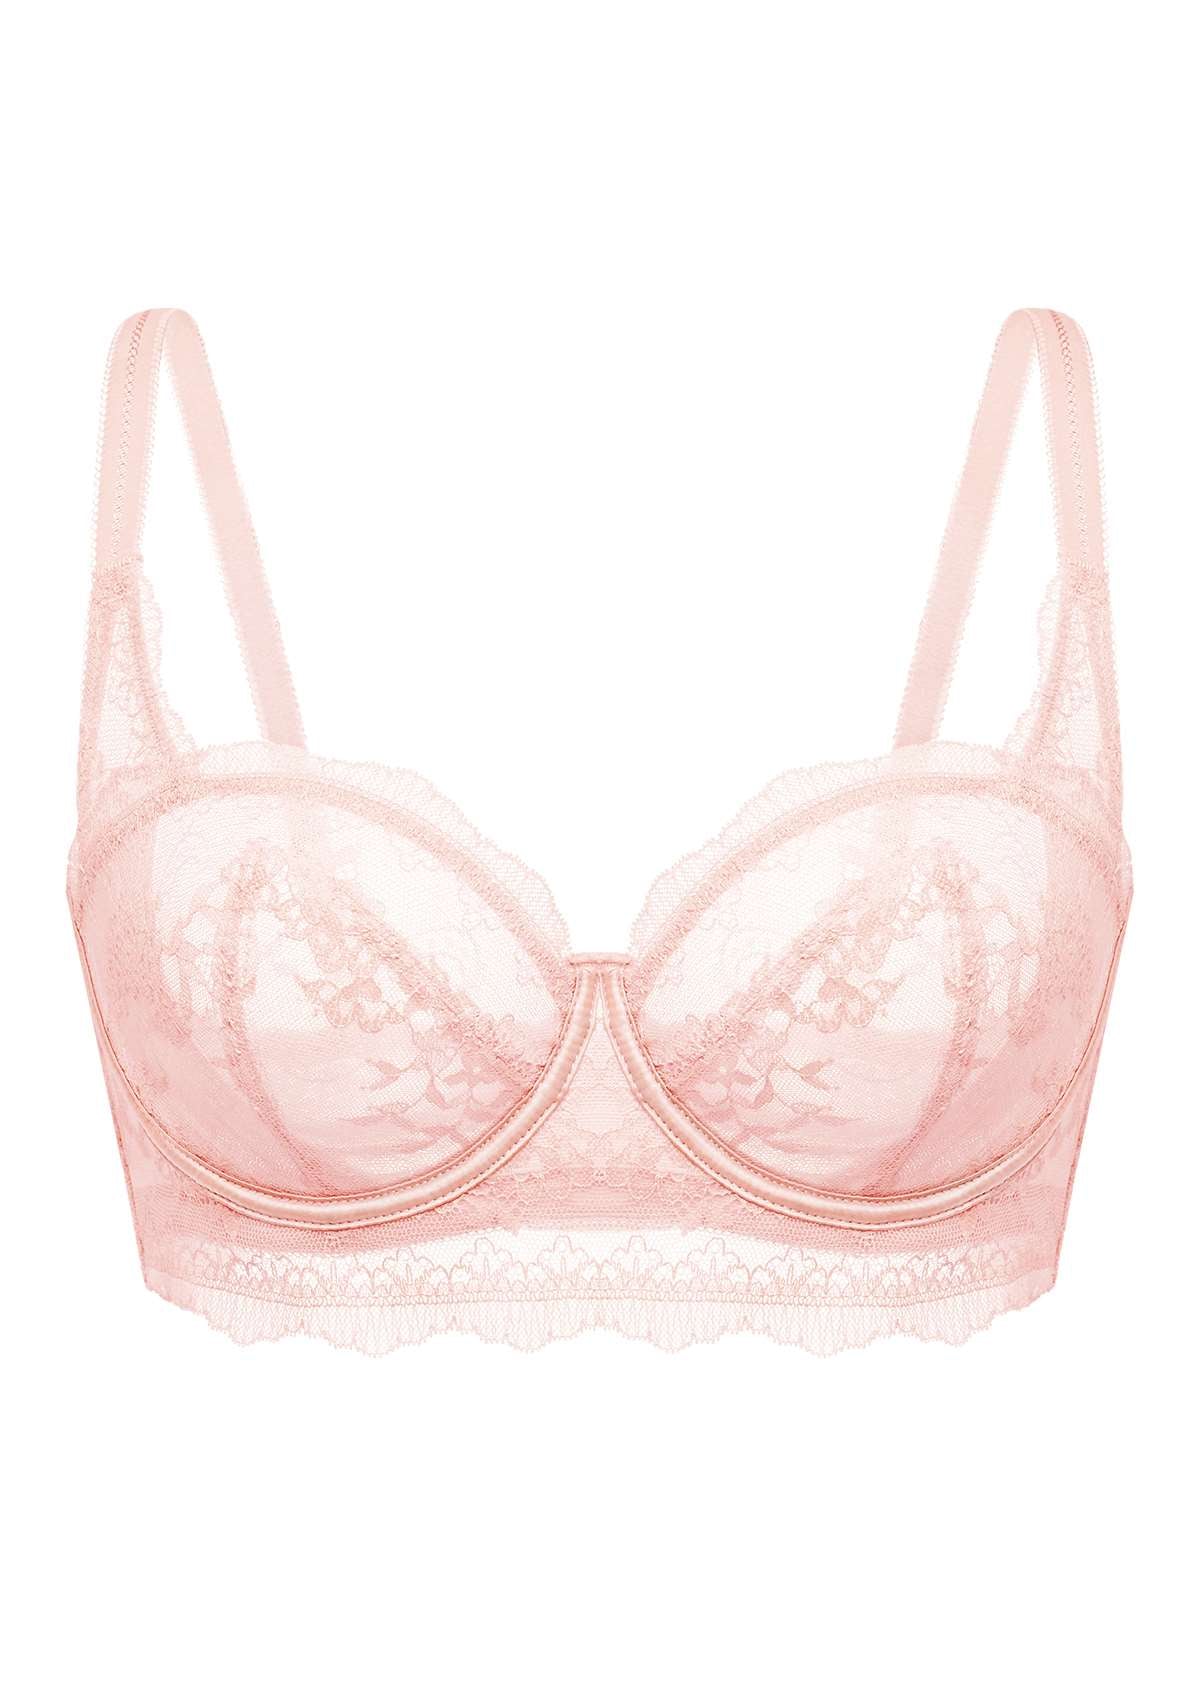 HSIA Floral Lace Unlined Bridal Balconette Delicate Bra Panty Set - Pink / 40 / D